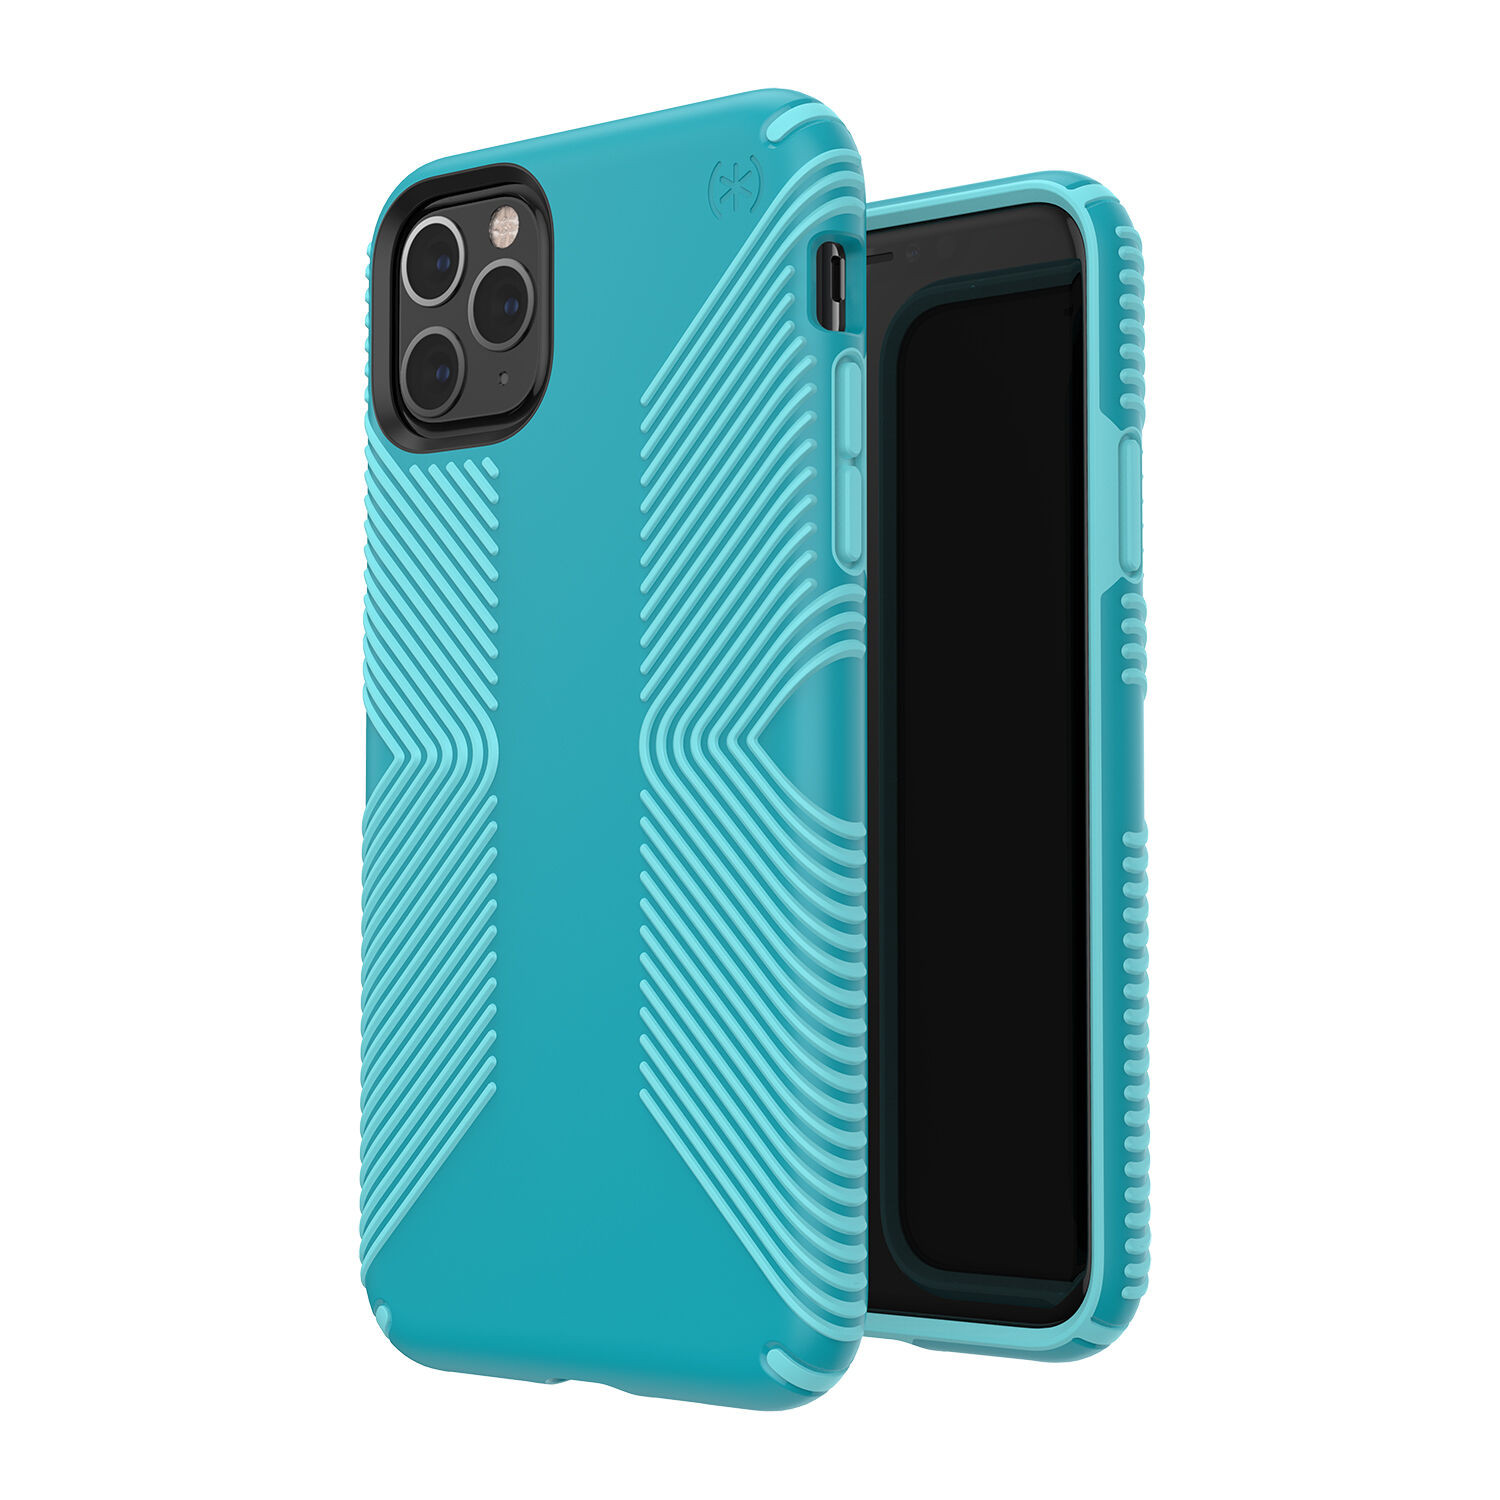 Speck Presidio Grip for iPhone 11 Pro Max Skyline Blue